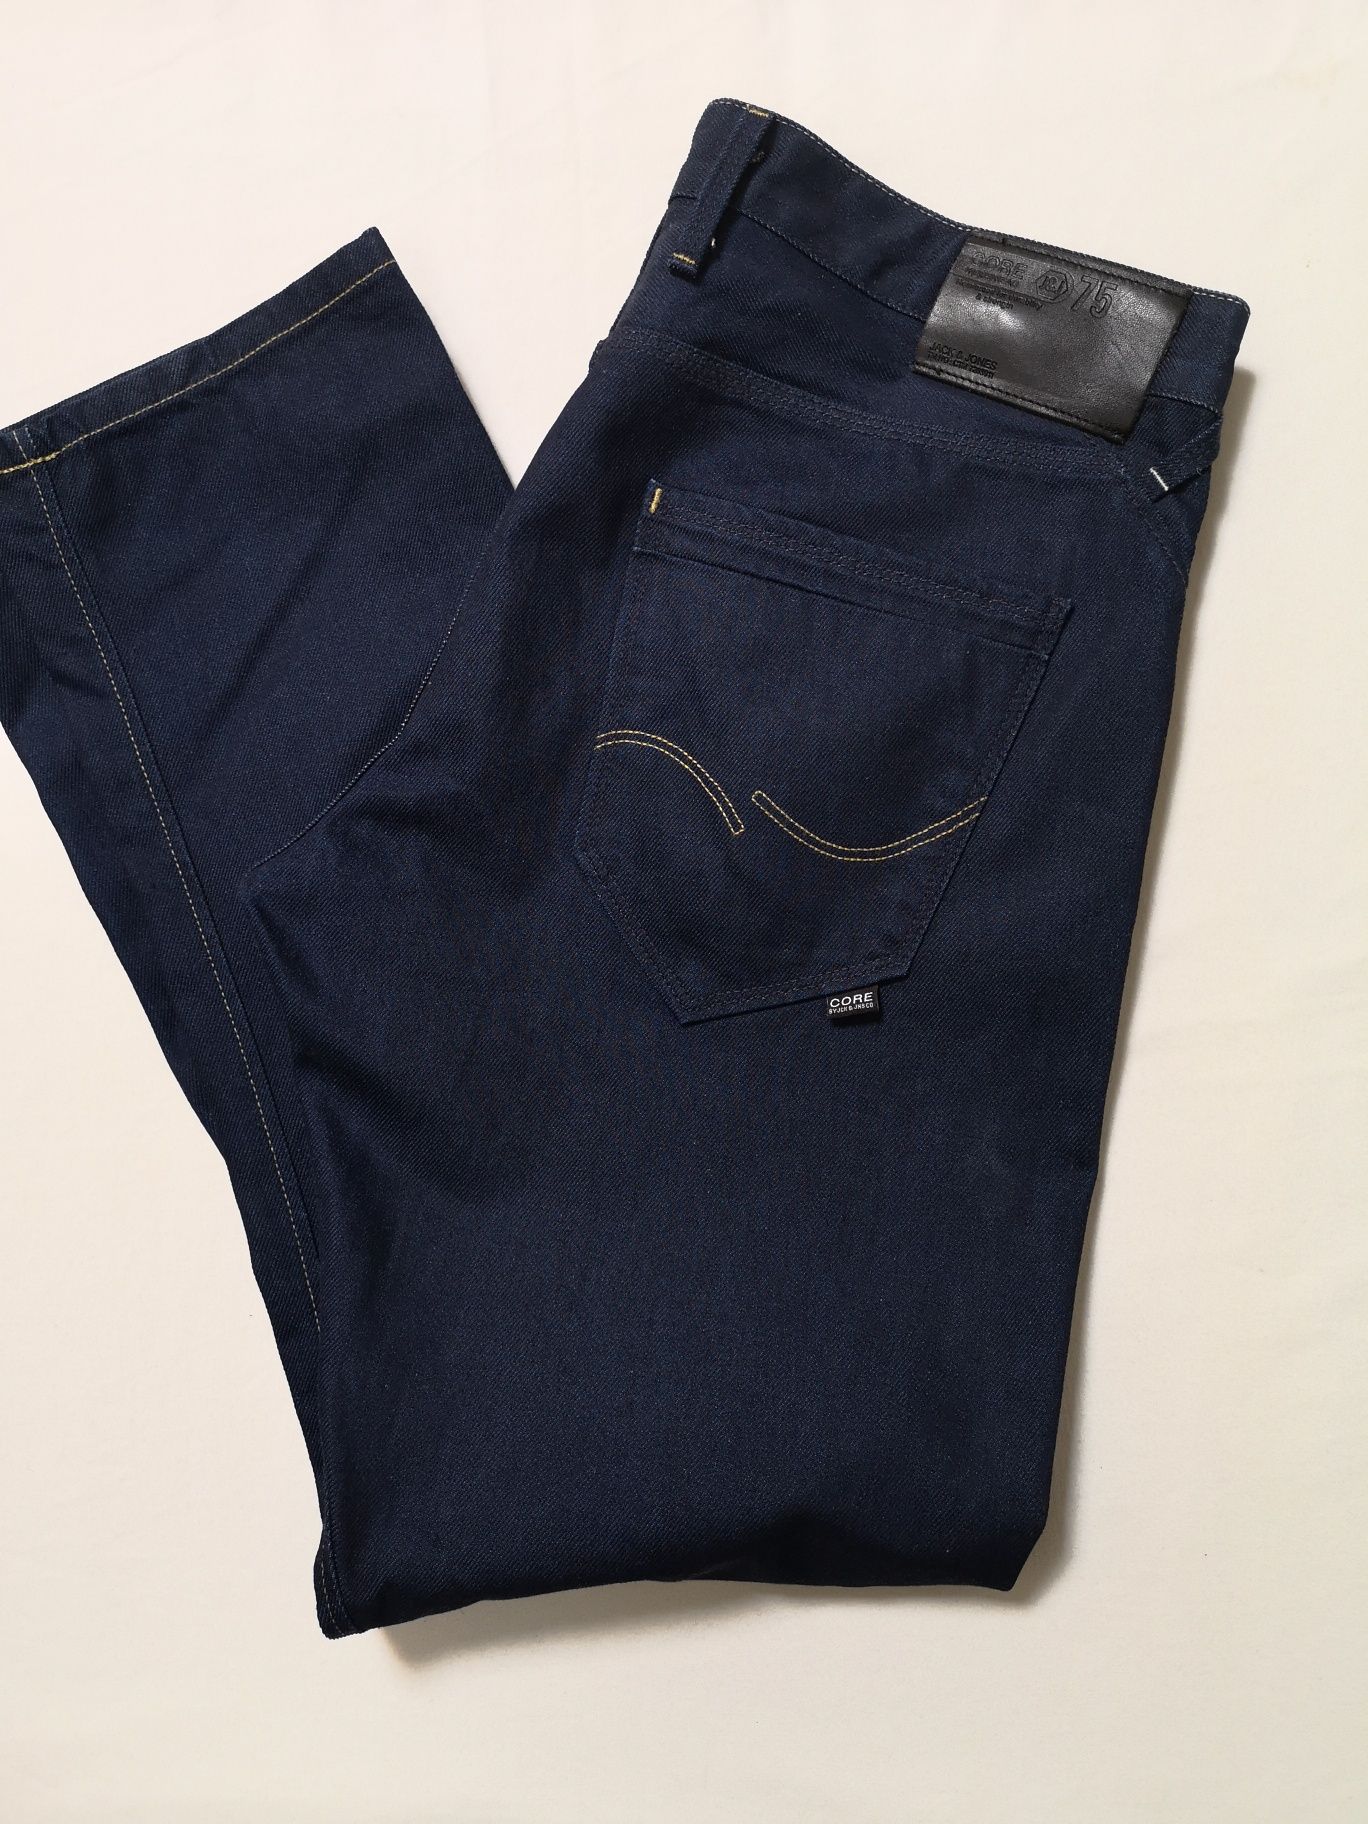 J&J Core jeans W 36